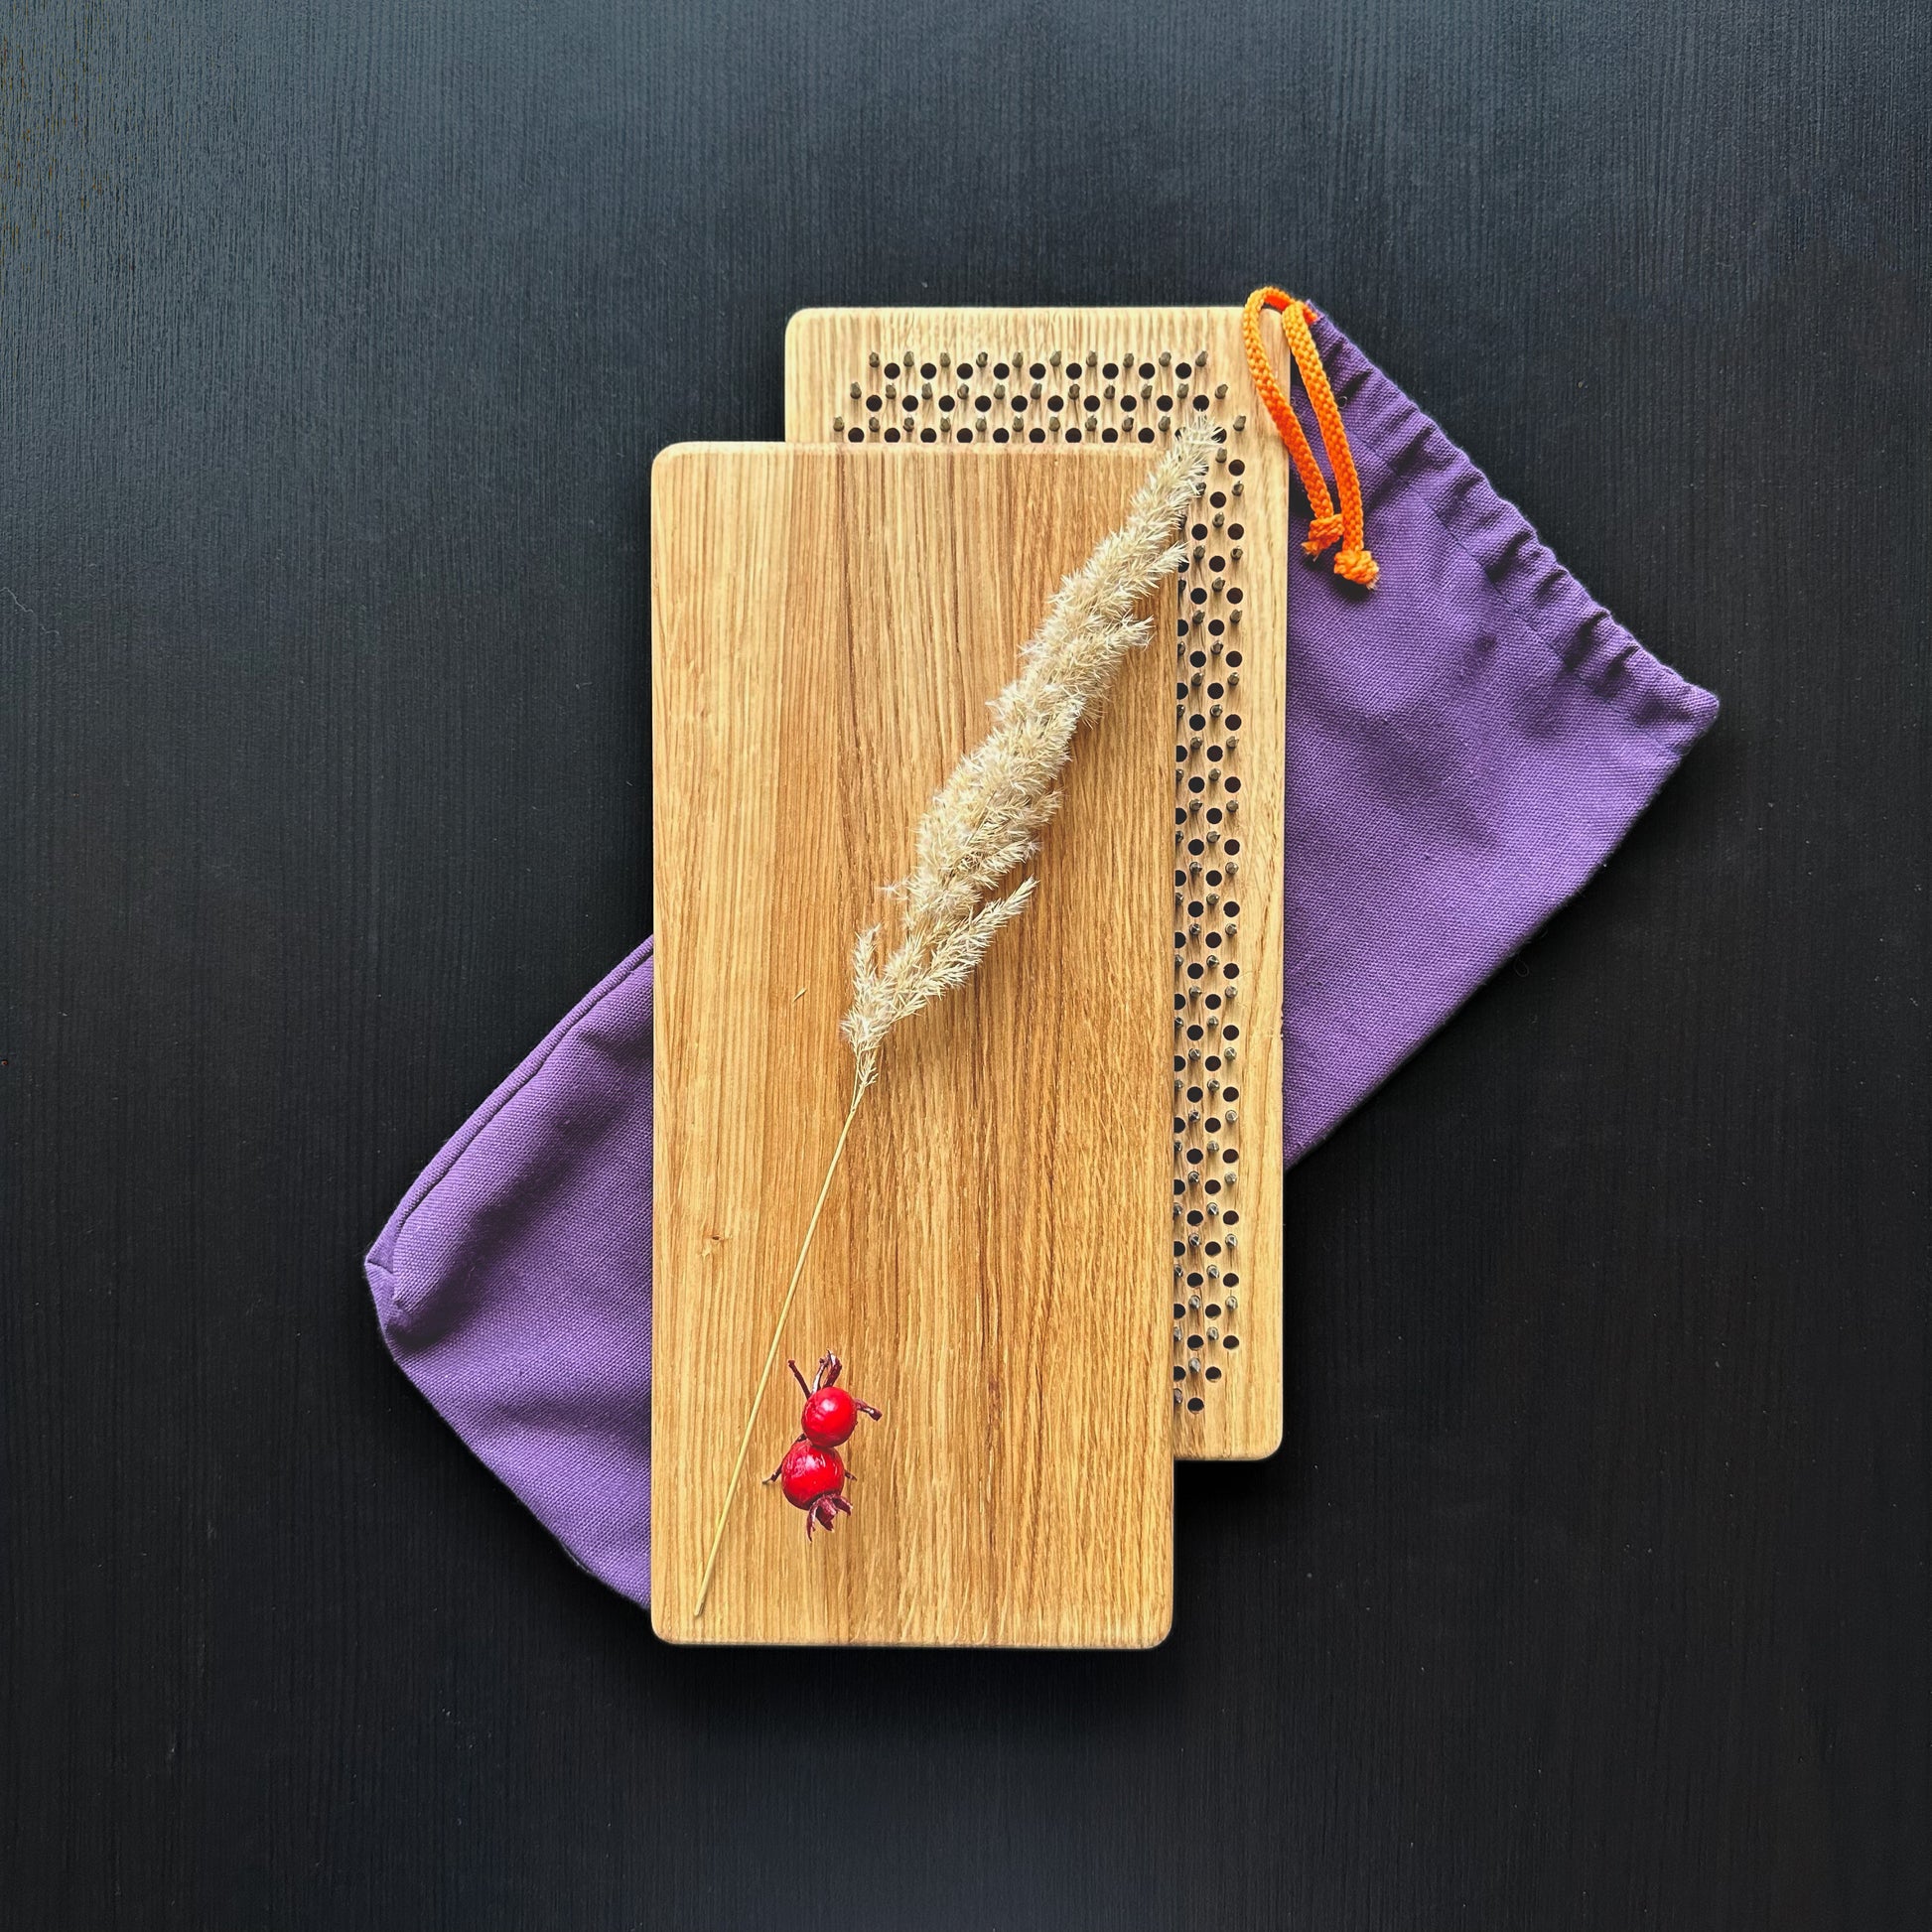 oak Sadhu board nails 10mm with case